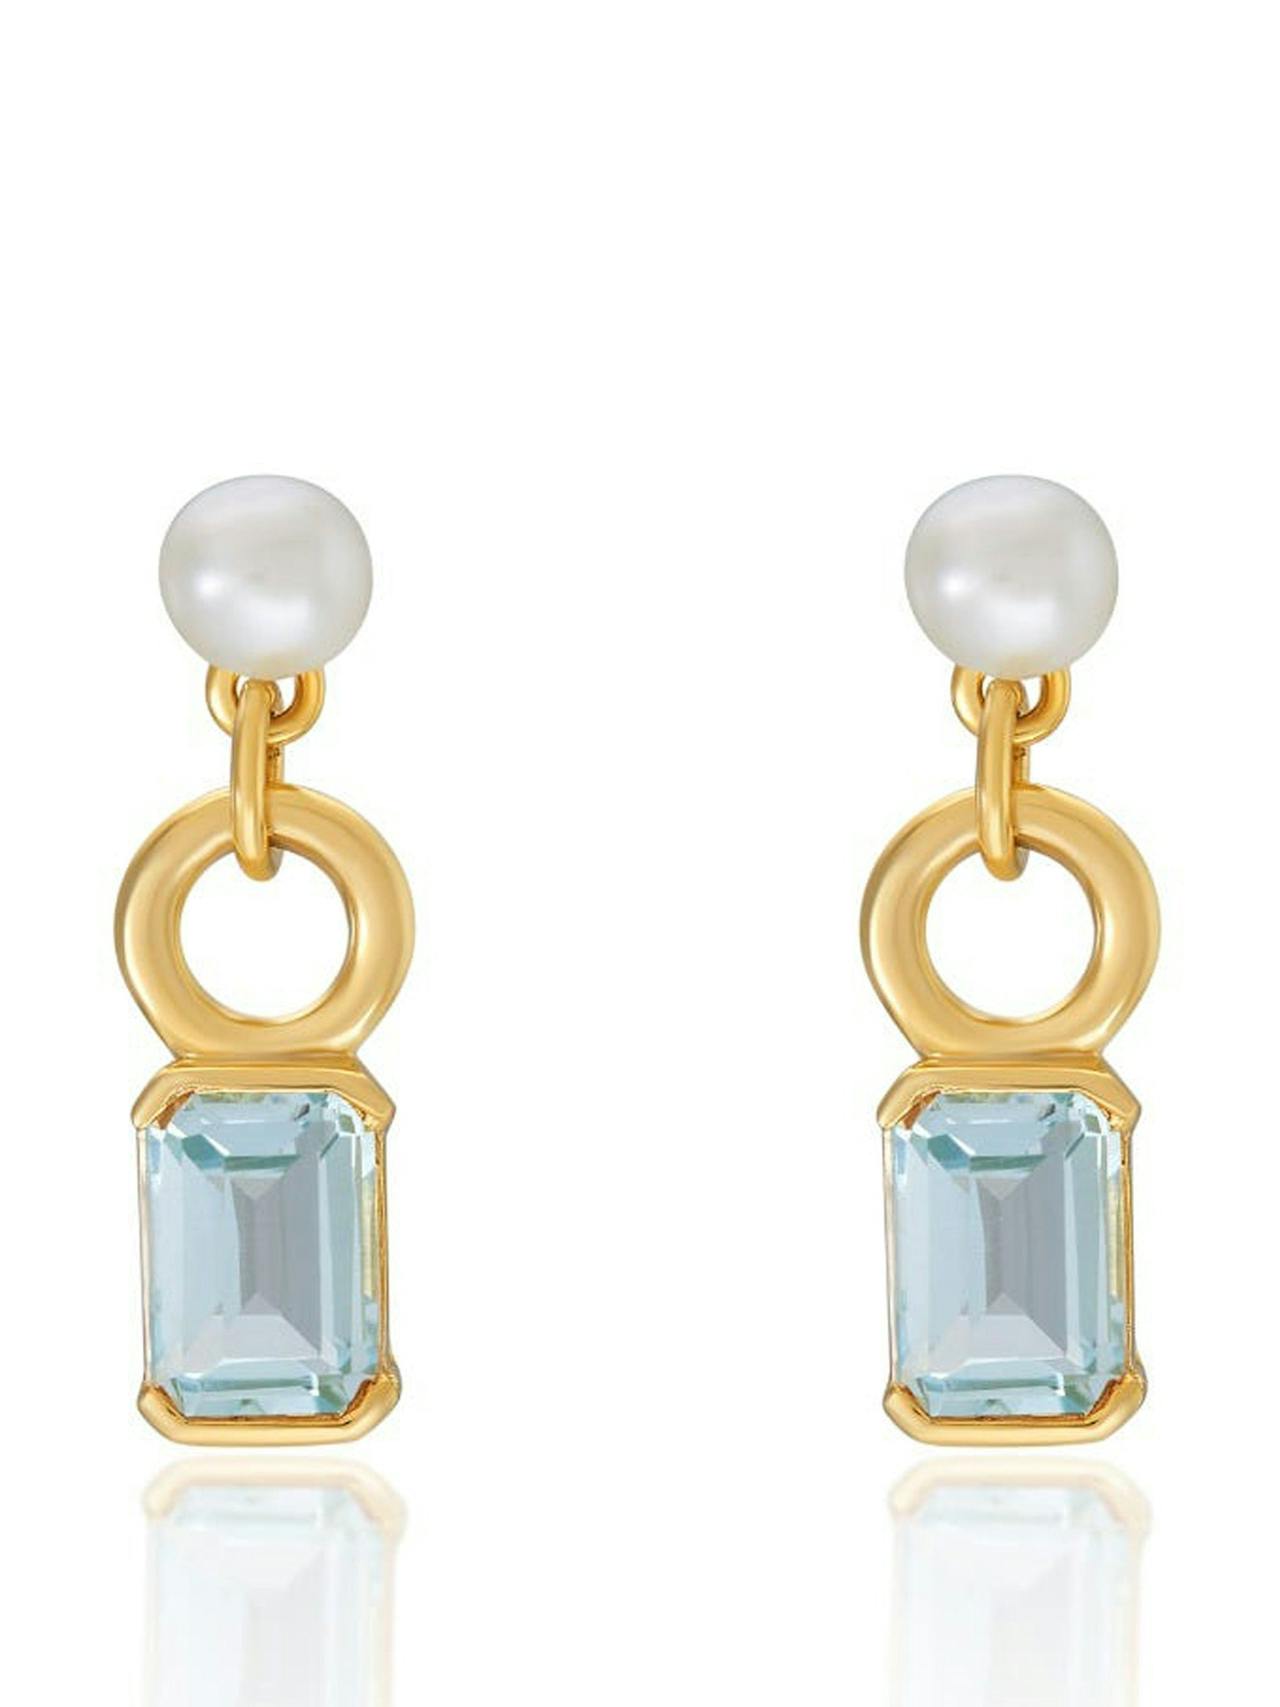 Elena pearl earrings with blue topaz